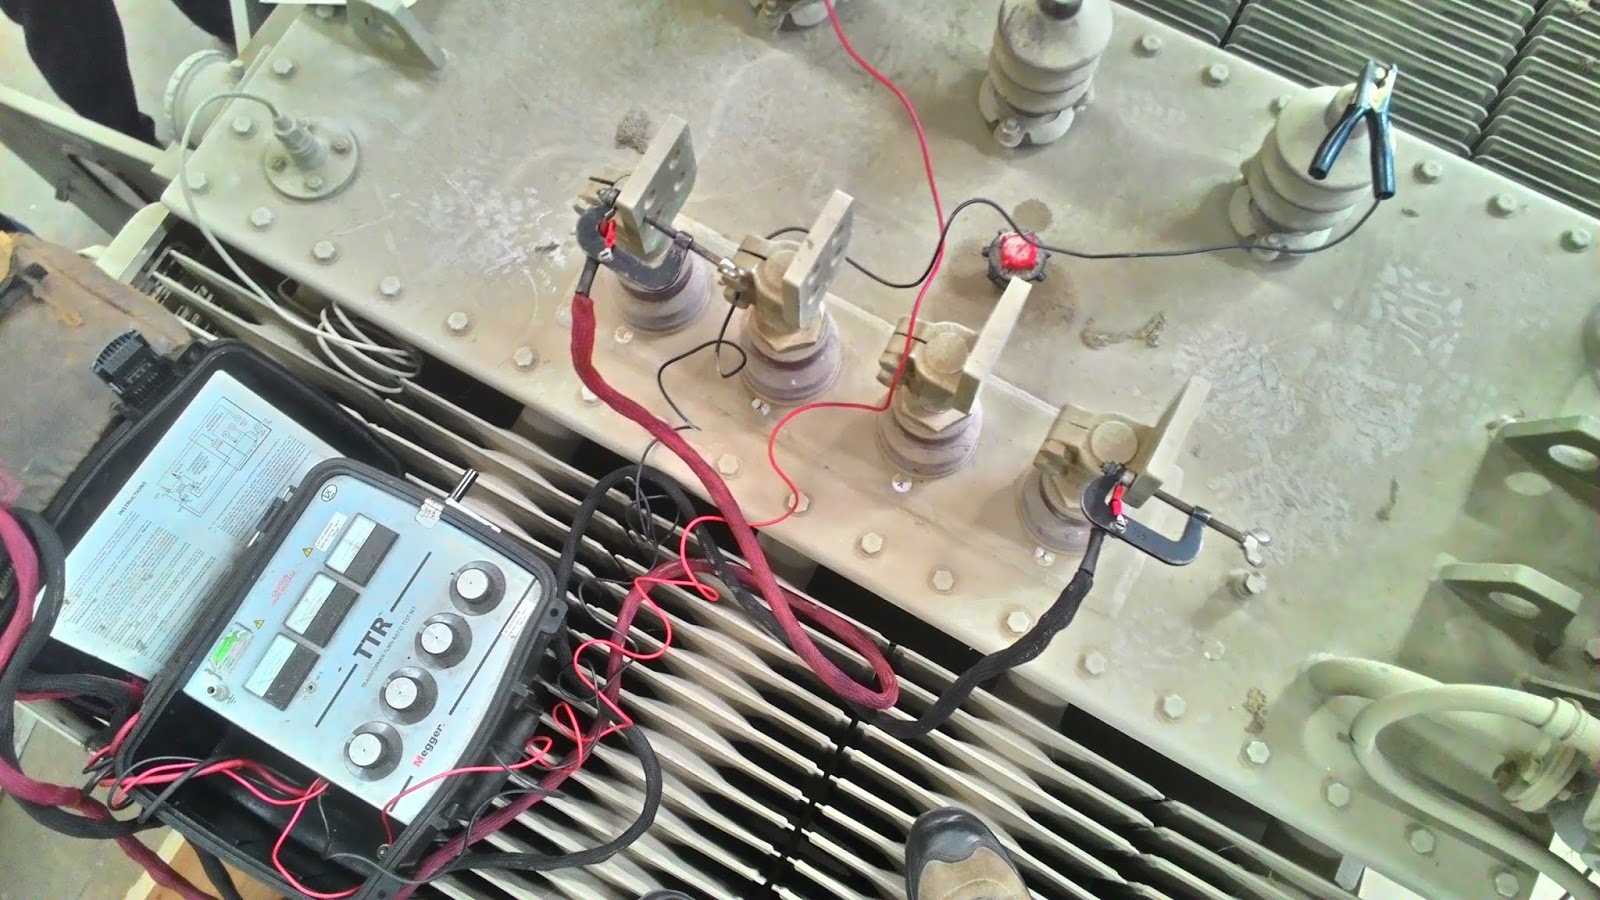 Электрический трансформатор тест. Понижающий трансформатор EWB. Transformer turn ratio Tester. 380 В 110 В дуговой трансформатор.